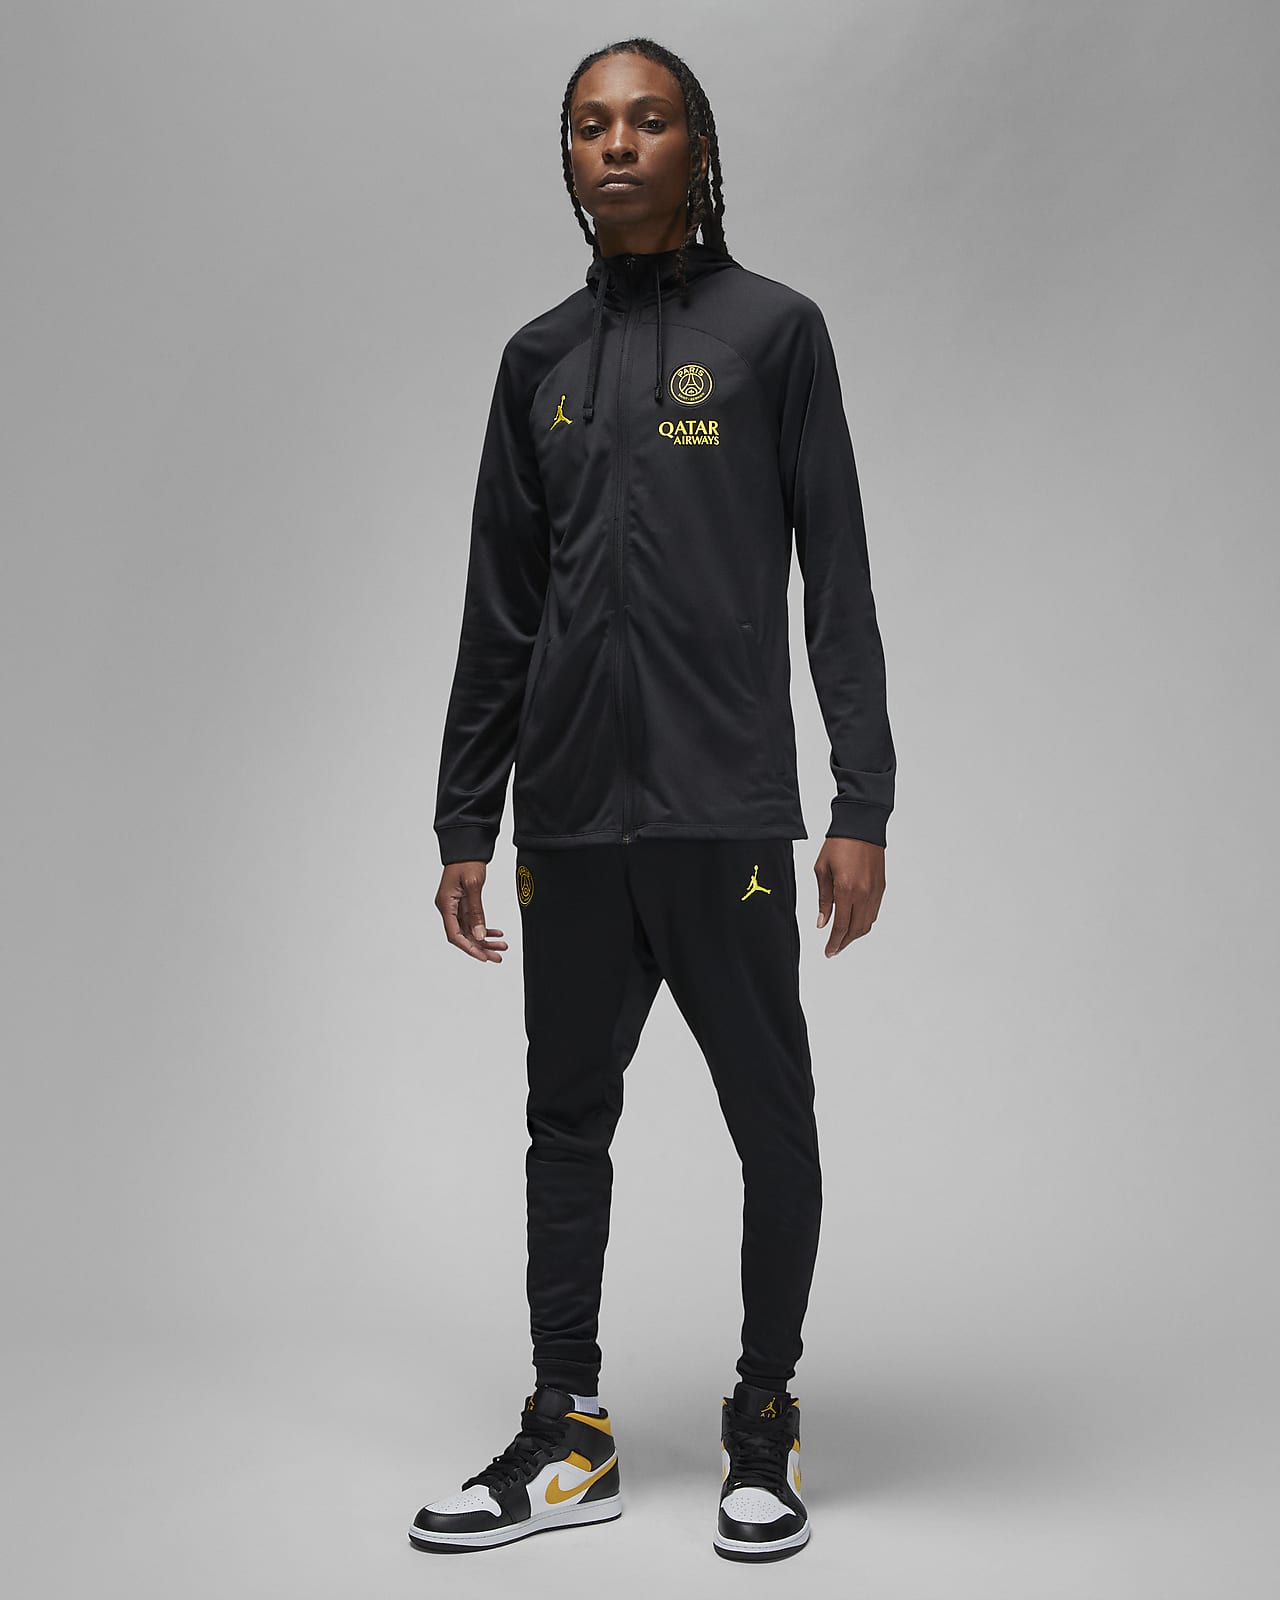 Paris Saint-Germain Jordan Brand Tracksuits, PSG Track Suit